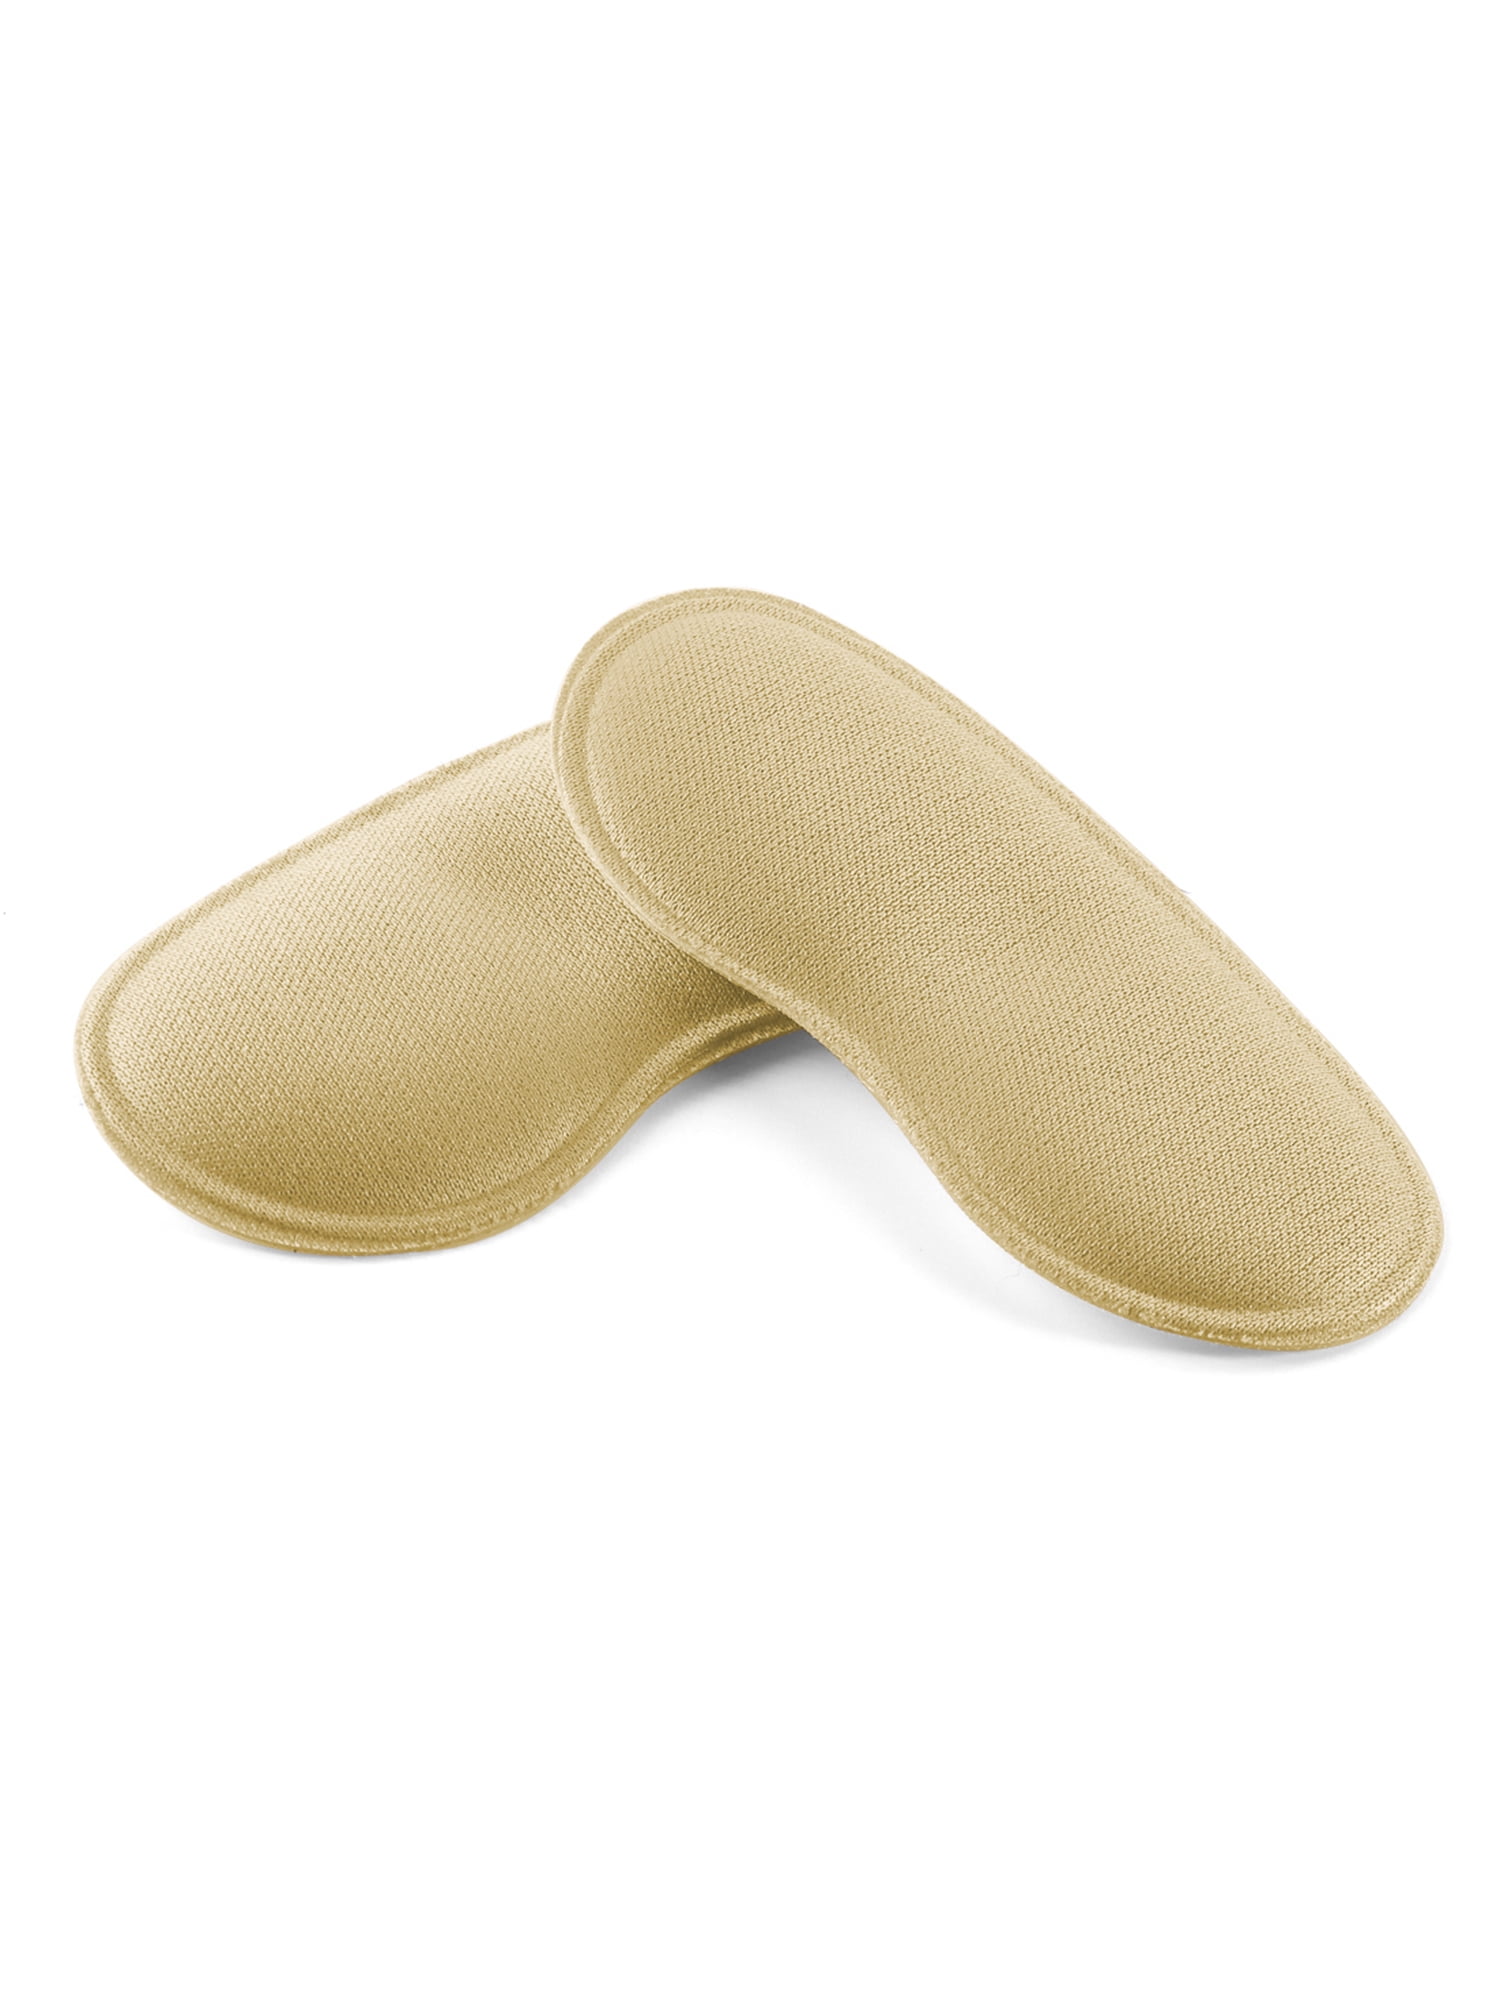 Sponge Heel Grips Liner Self-adhesive Heel Snugs Stickers High Heel ...